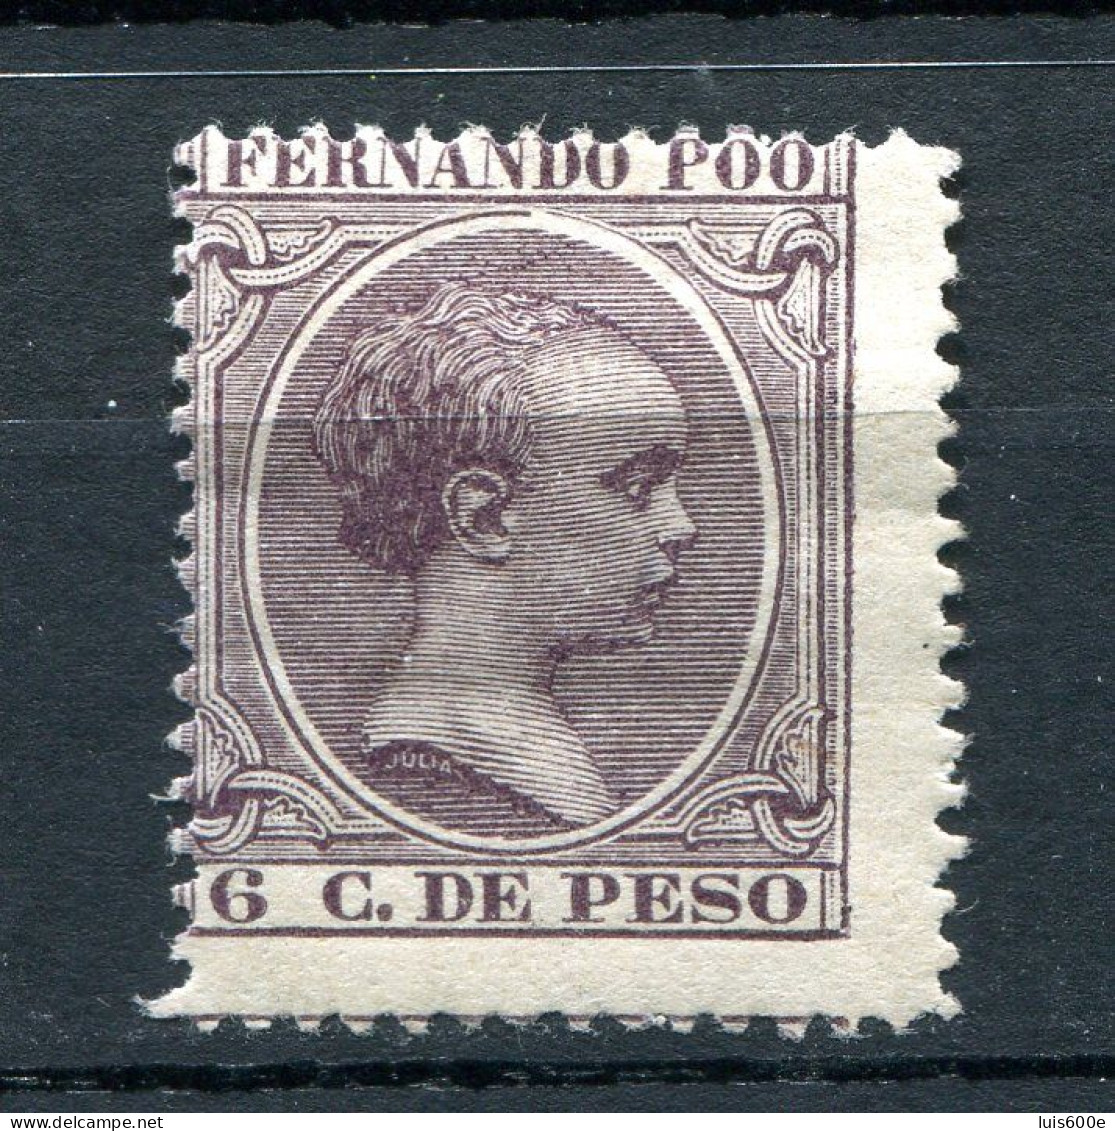 1894/96.FERNANDO POO.EDIFIL 15*.NUEVO CON FIJASELLOS(MH).CATALOGO 23€ - Fernando Poo